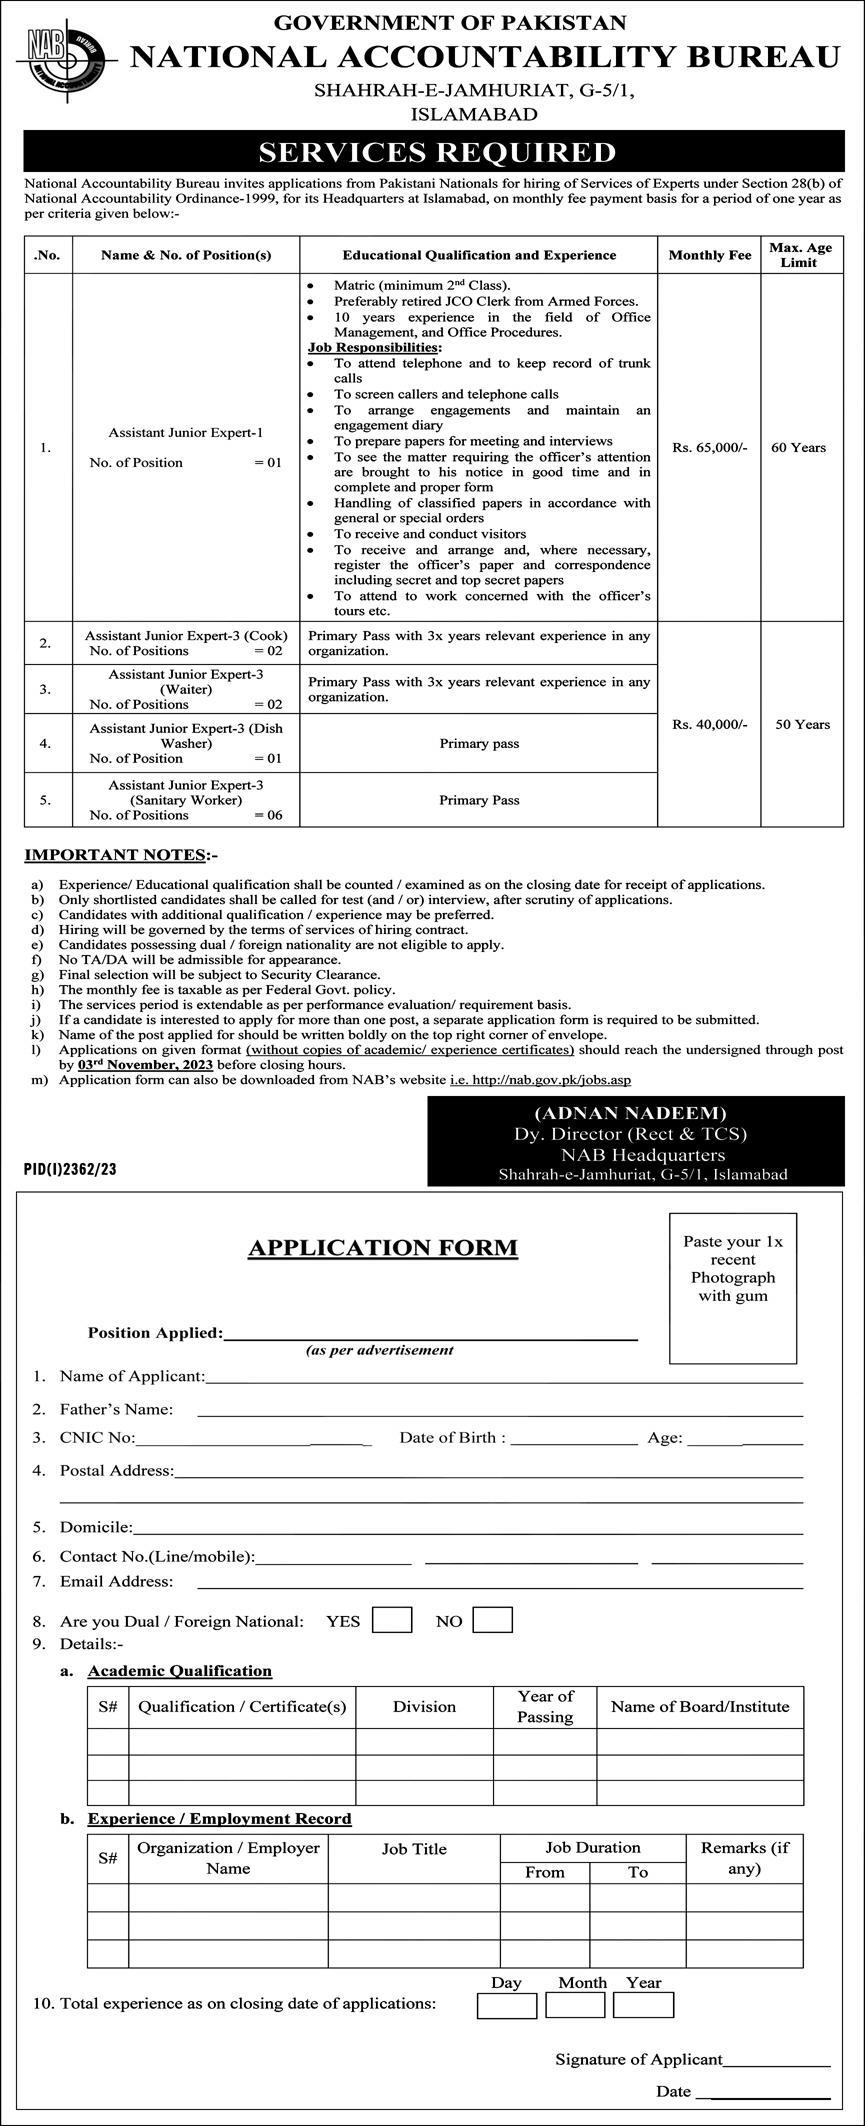 NAB Jobs Advertisement & Application Form